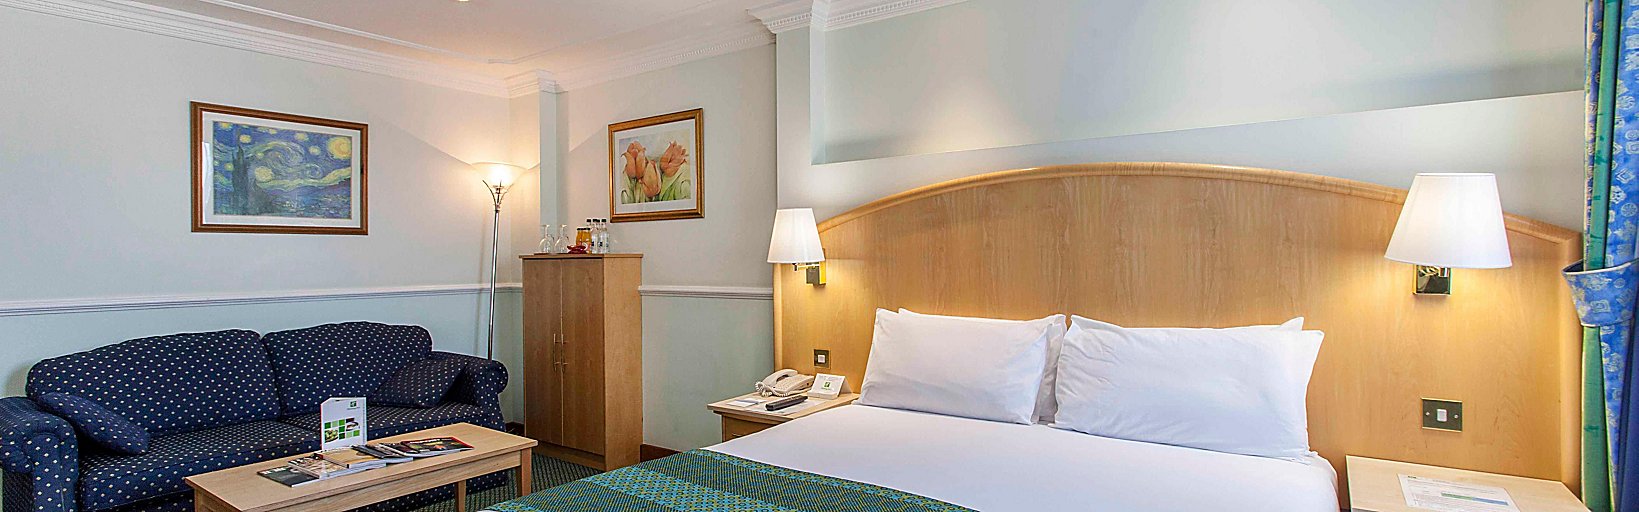 Holiday Inn London Hotels Holiday Inn London Oxford Circus Hotel Room Rates